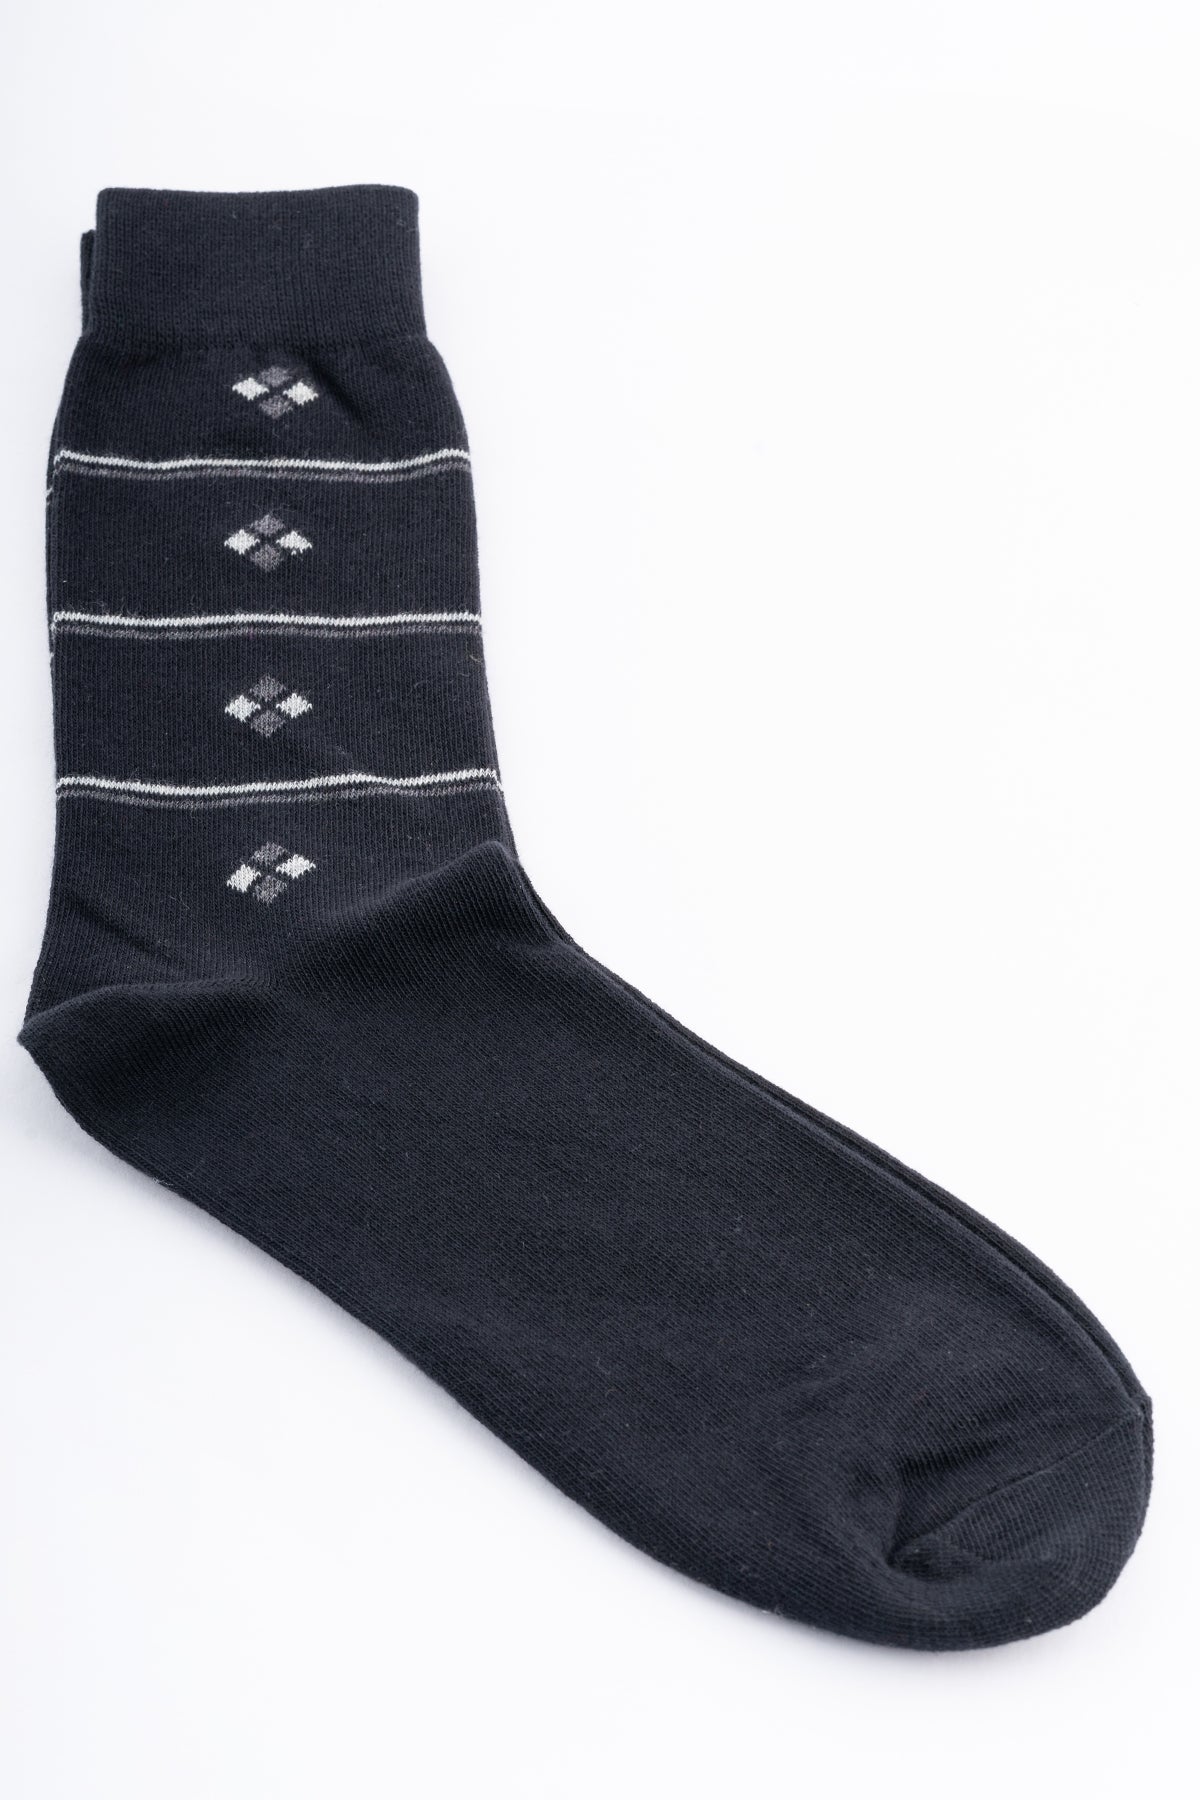 Men's Black Printed Everyday Socks